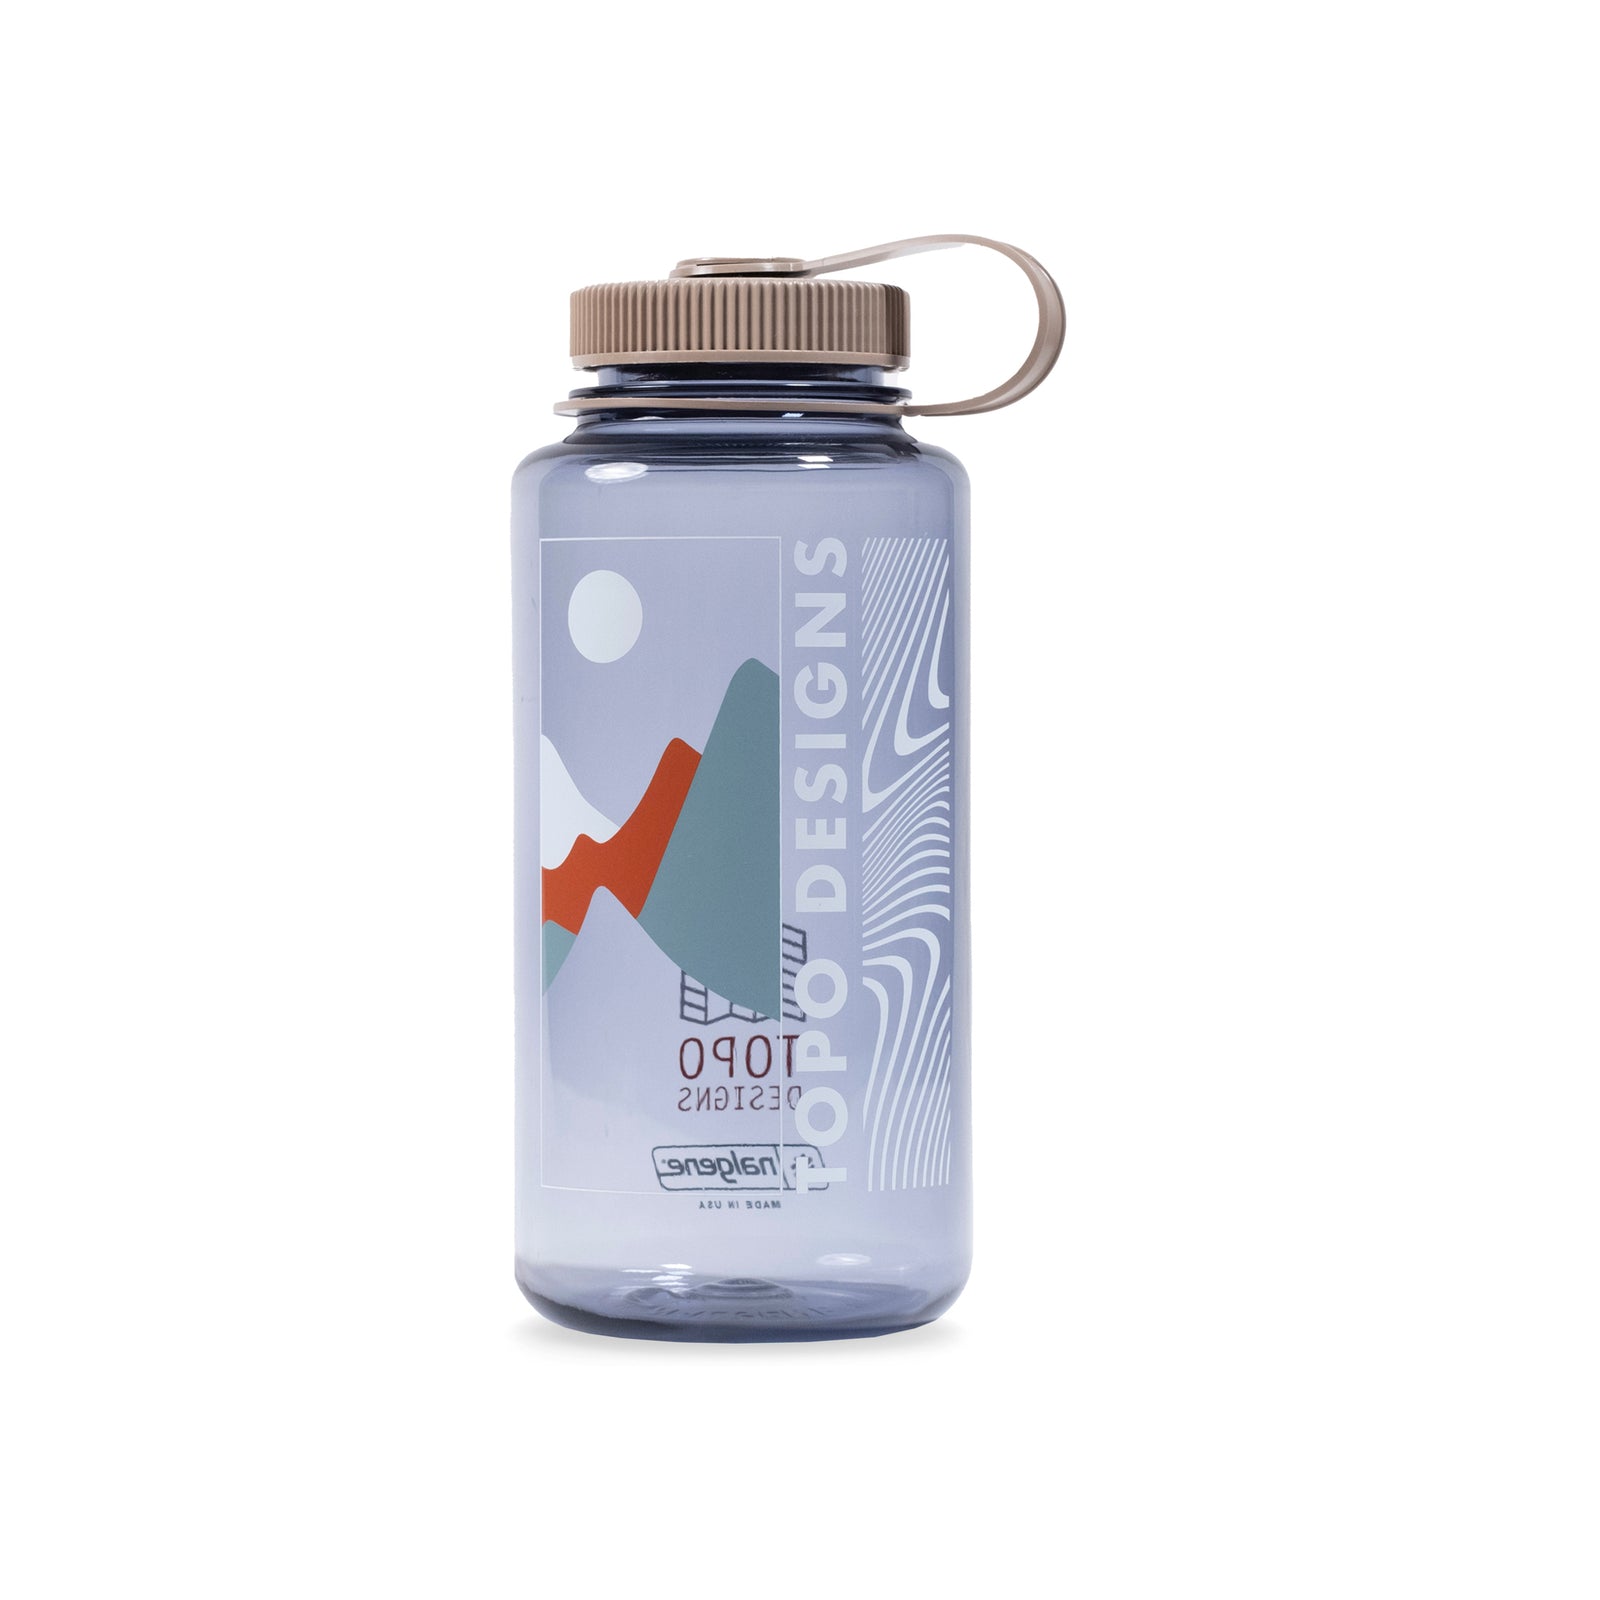 Topo Designs Nalgene 32 oz Wide Mouth Water Bottle in "Mountain Waves / Gray"